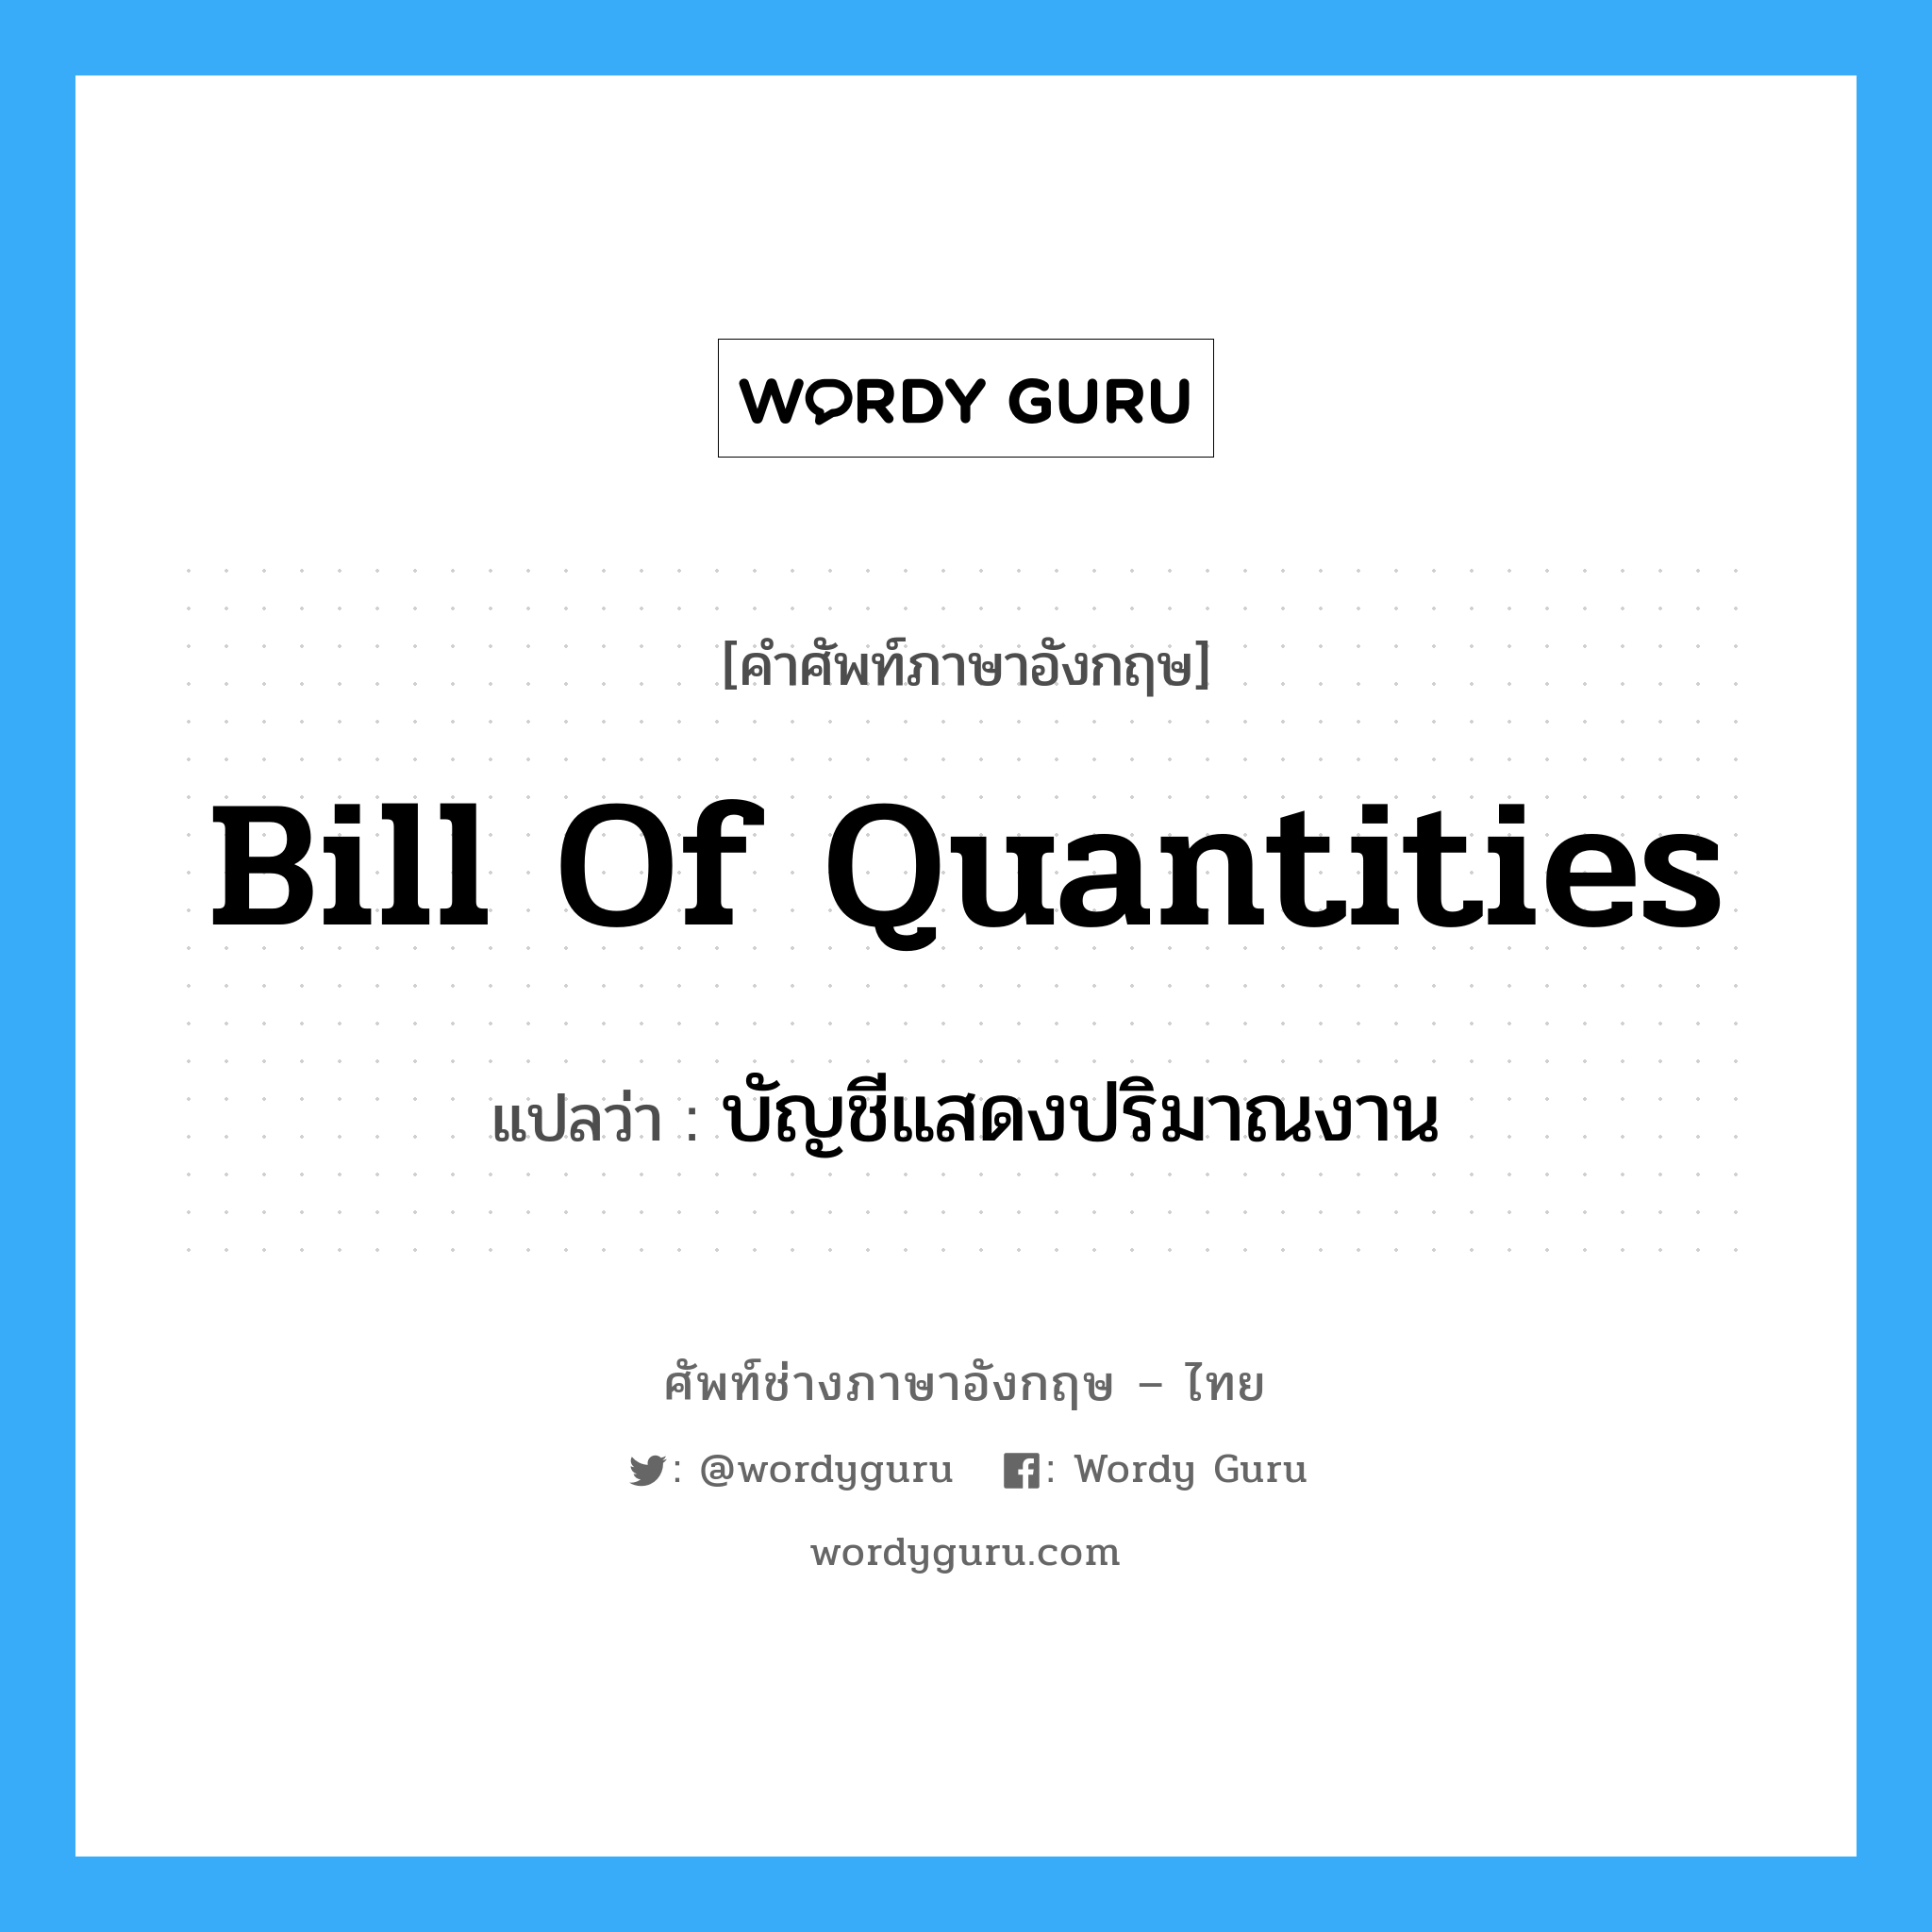 Bill of Quantities แปลว่า?, คำศัพท์ช่างภาษาอังกฤษ - ไทย Bill of Quantities คำศัพท์ภาษาอังกฤษ Bill of Quantities แปลว่า บัญชีแสดงปริมาณงาน